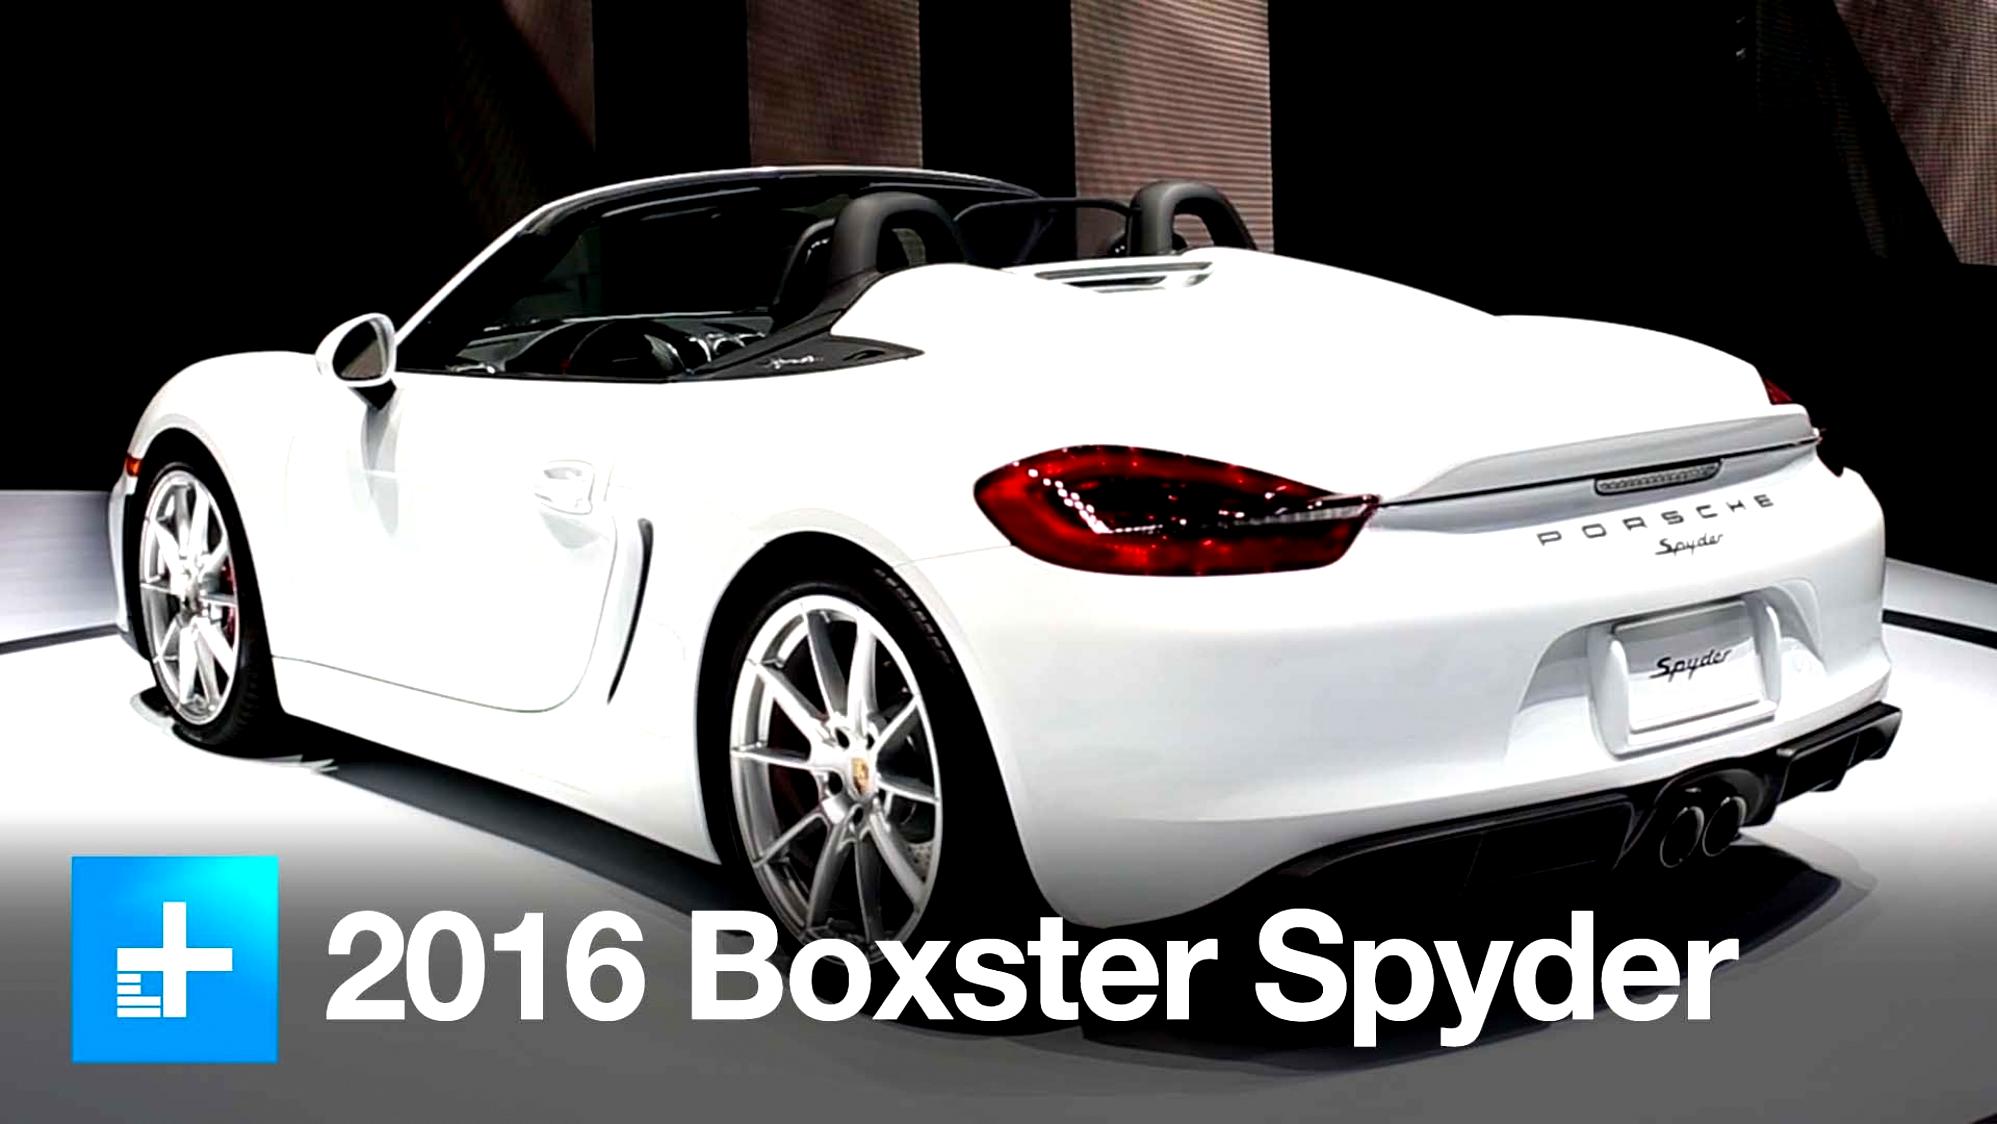 Porsche Boxster Spyder 2016 #56